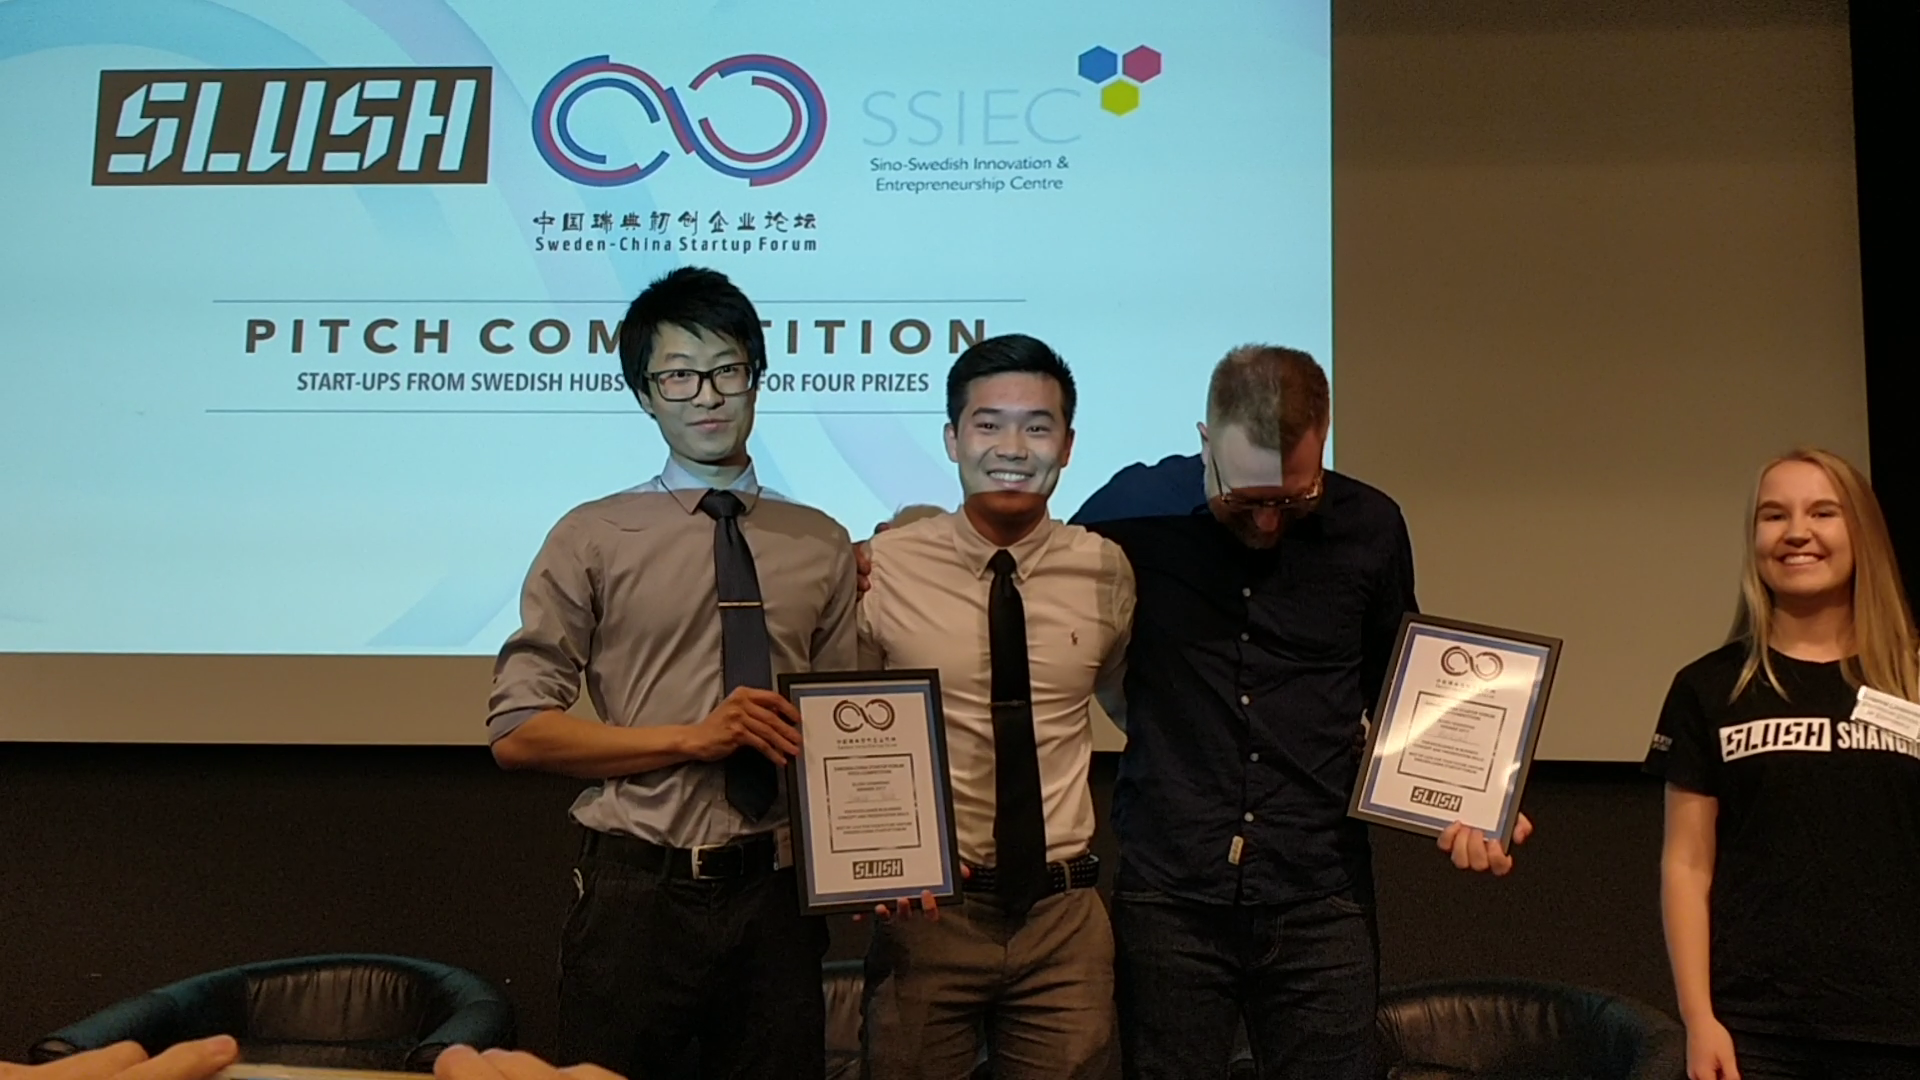 Lumeo Tech vinare av pitchtävling under Sweden-China Startup Forum